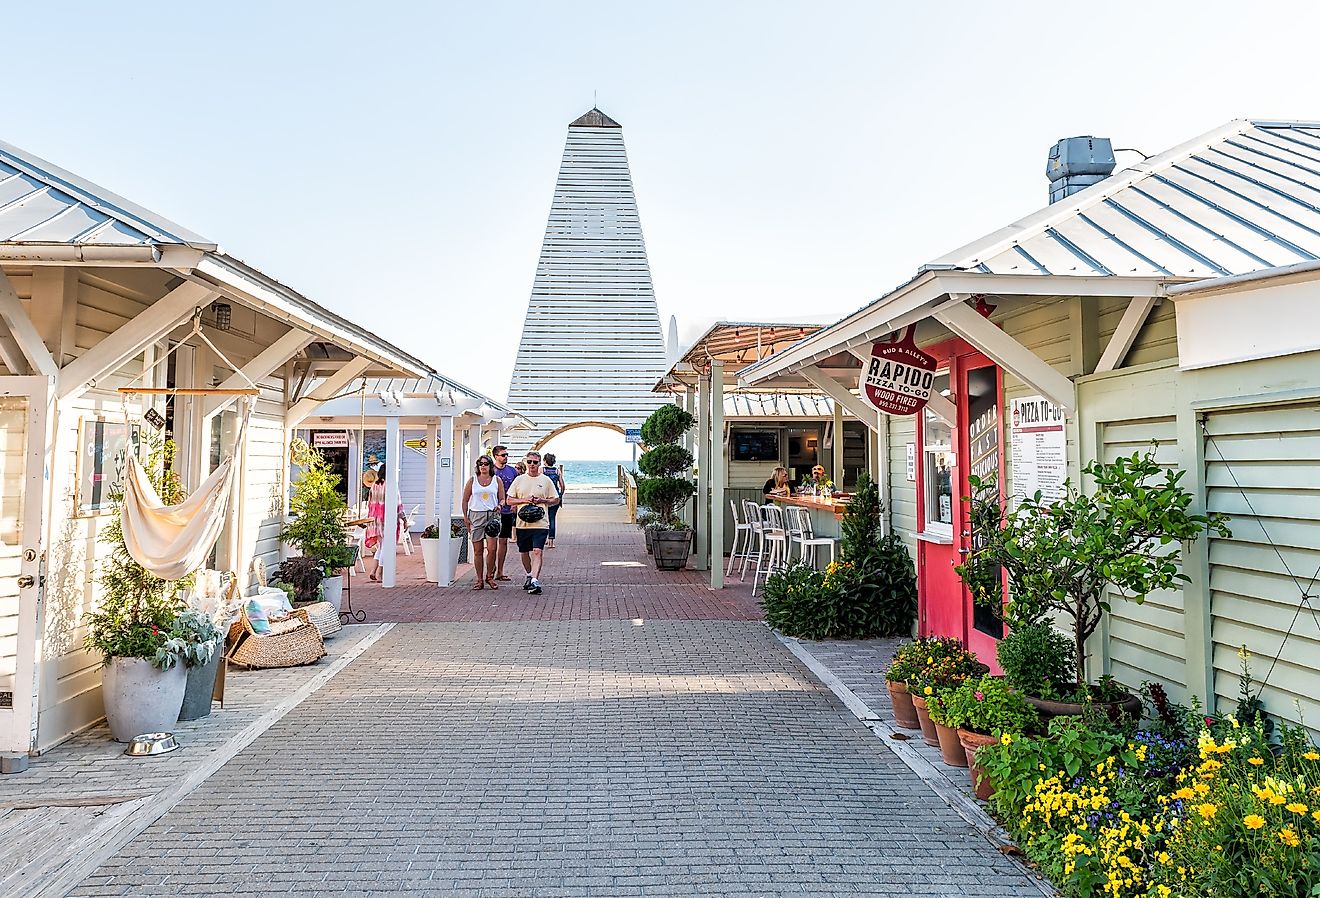 Historic square shopping area in Seaside, Florida. Image credit Kristi Blokhin via Shutterstock